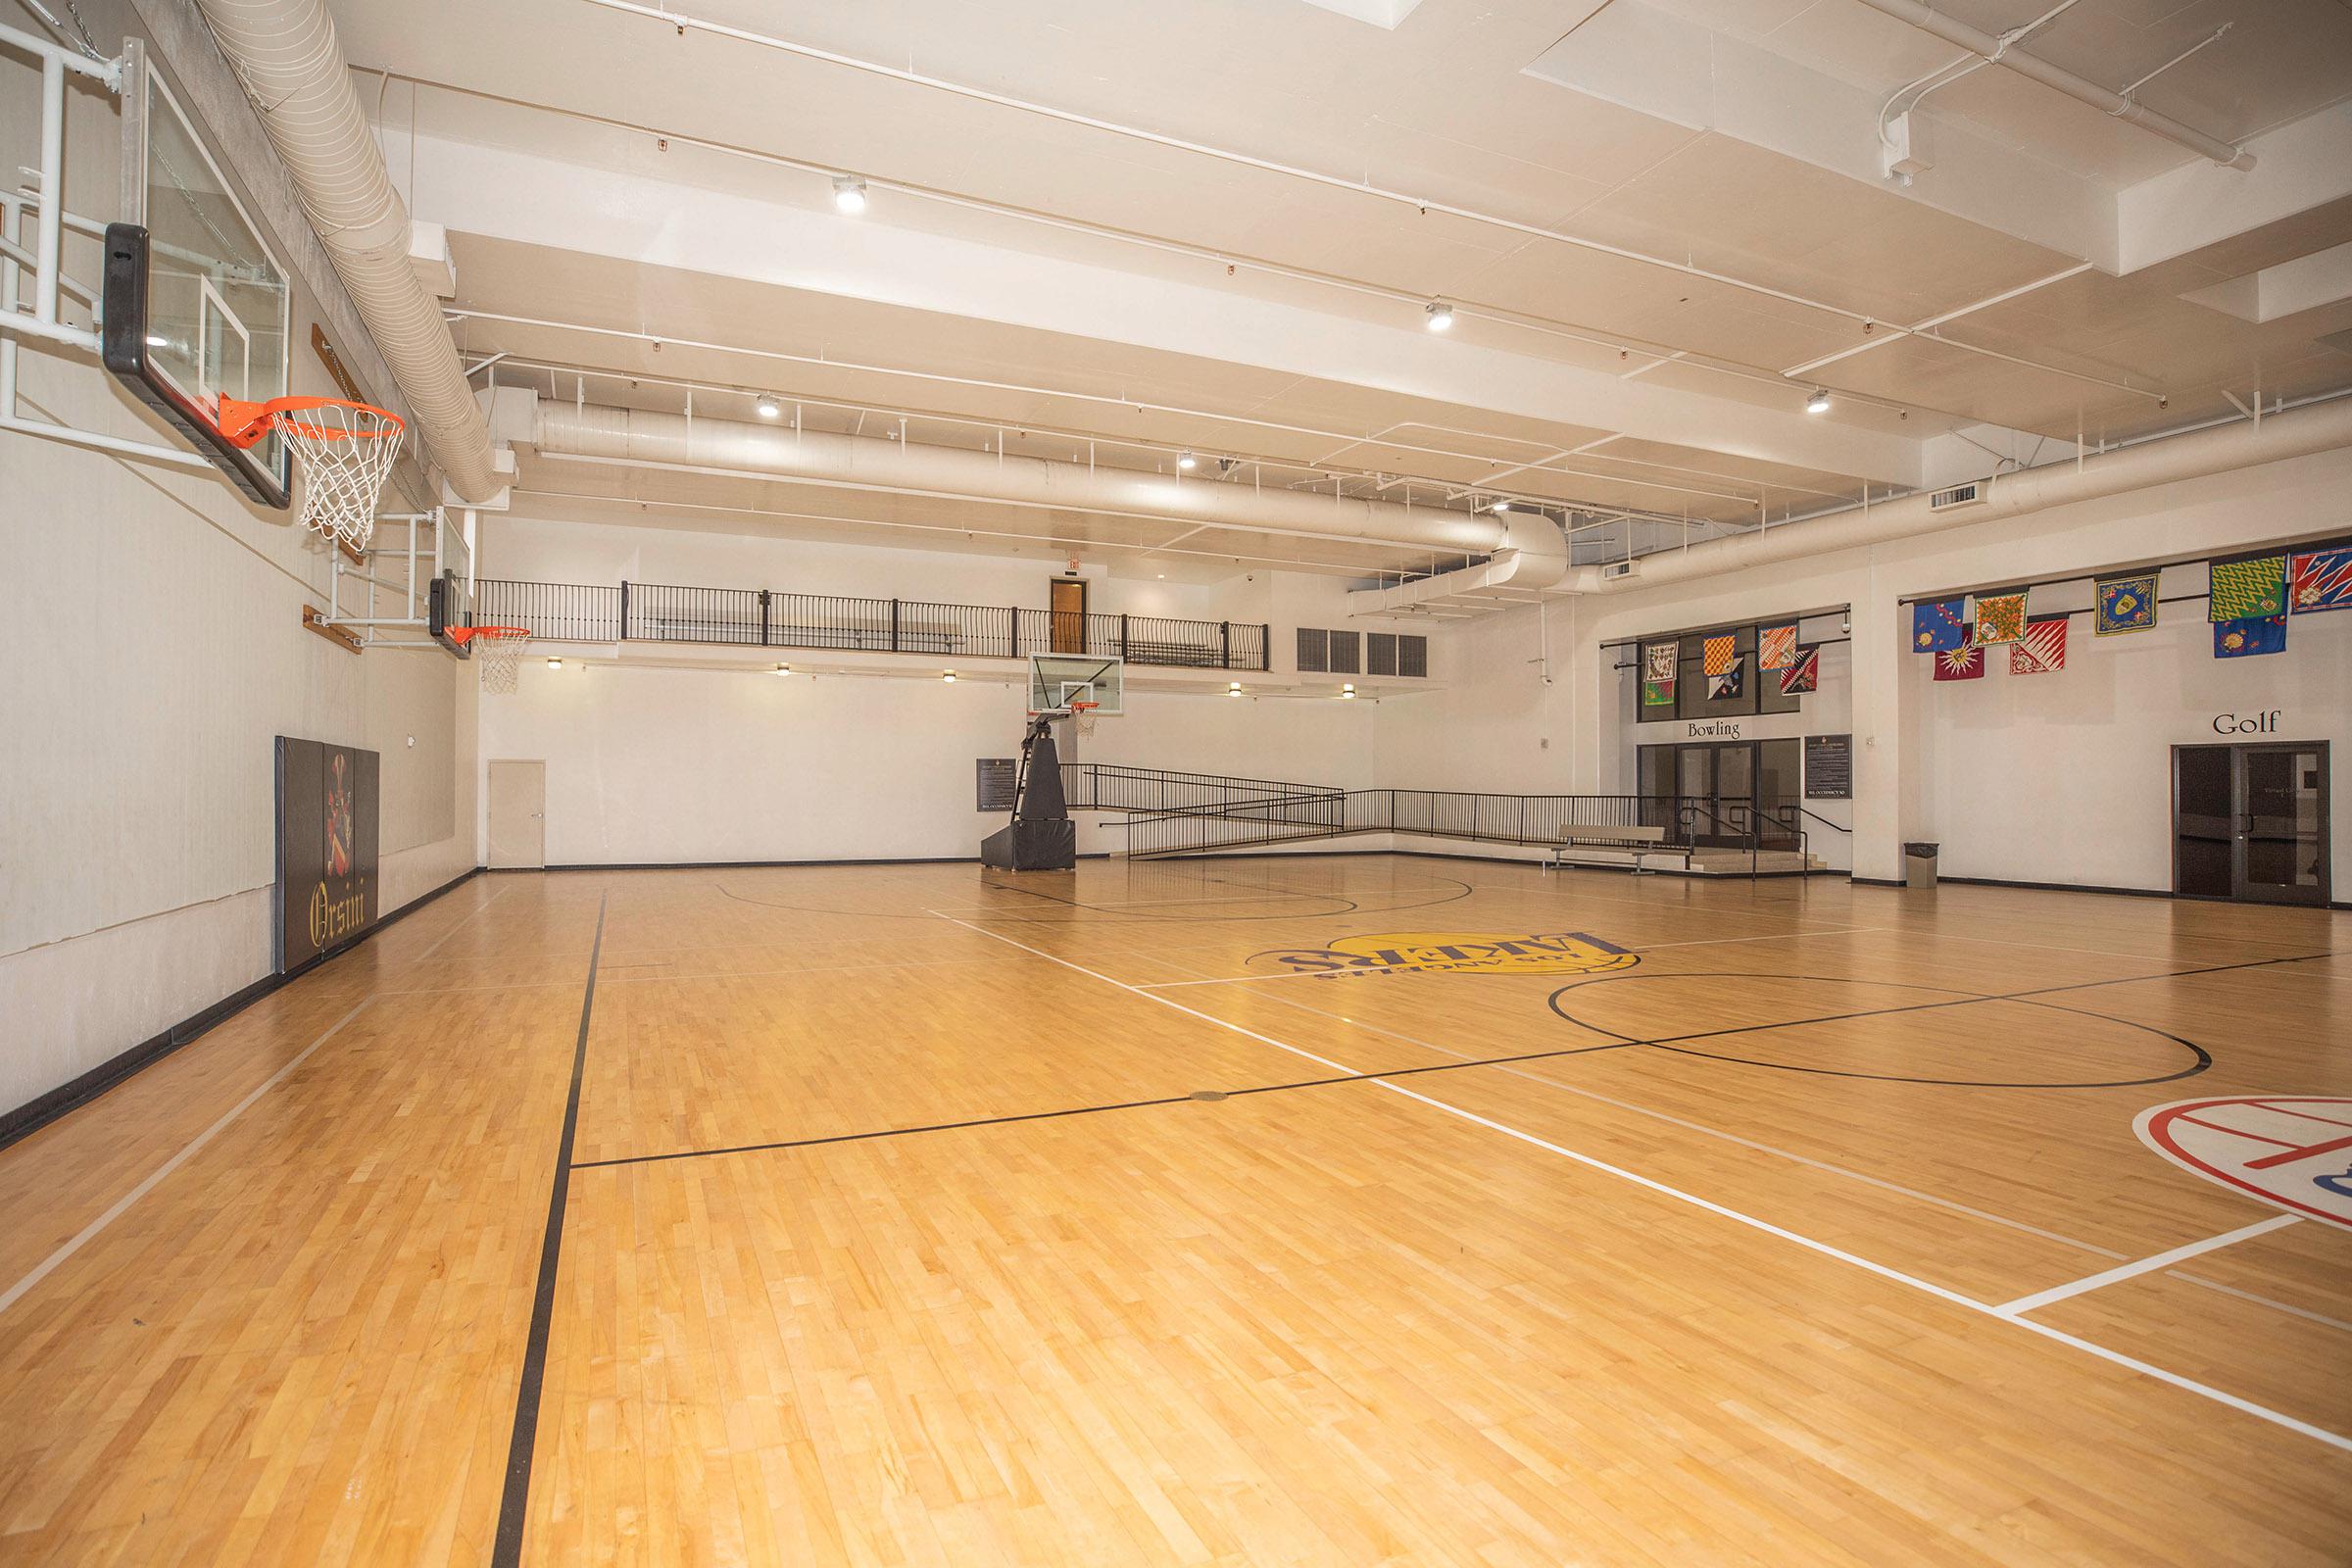 The Orsini basketball court